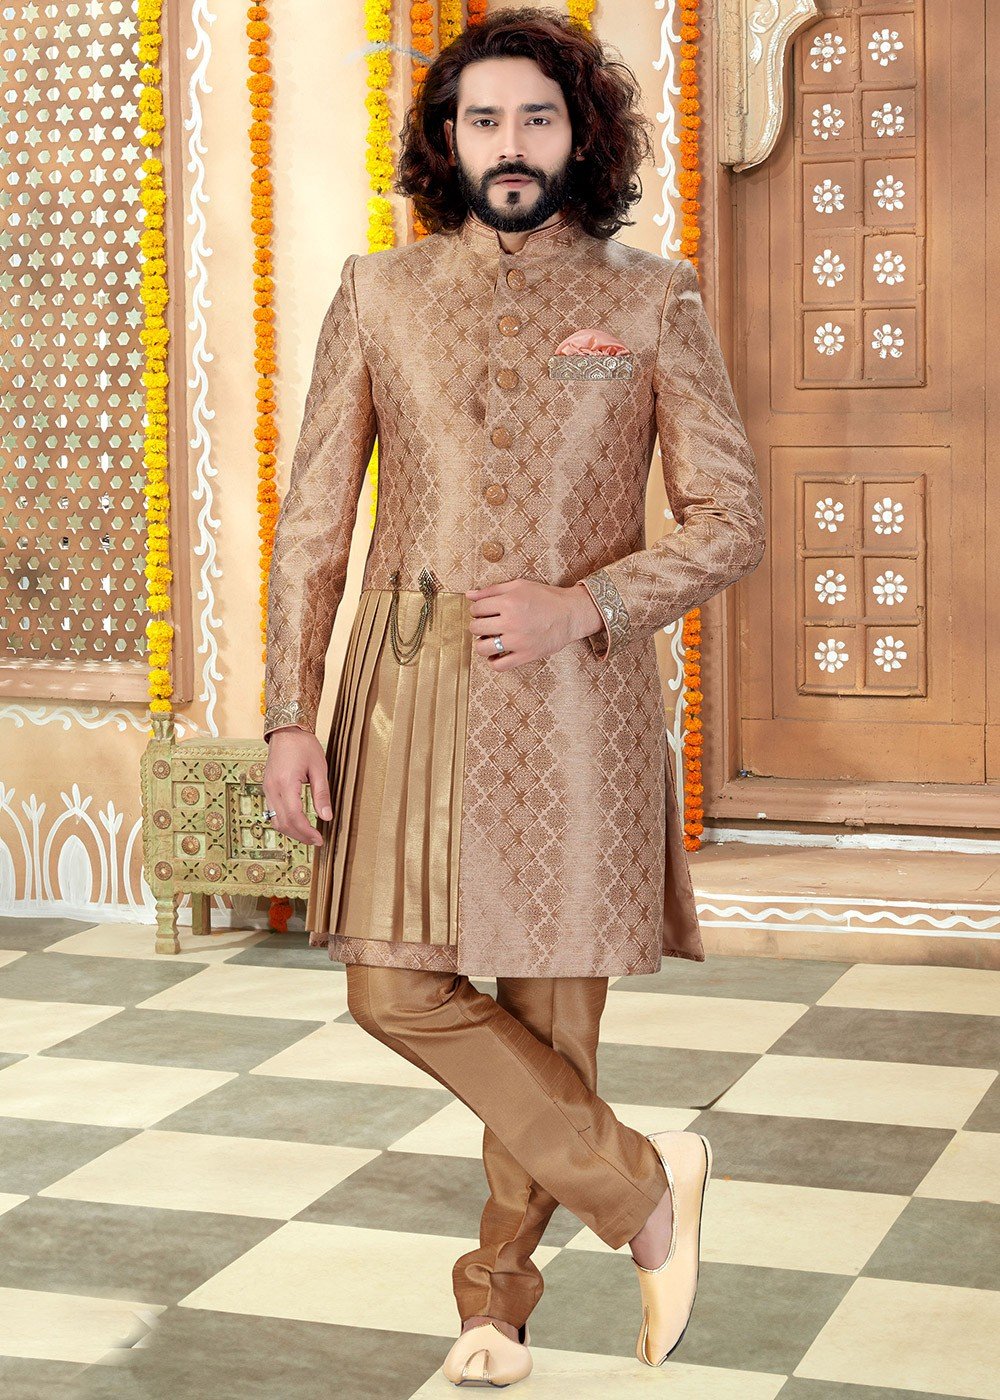 The ultimate Gentlemans guide to wearing a Sherwani  Sherwani King